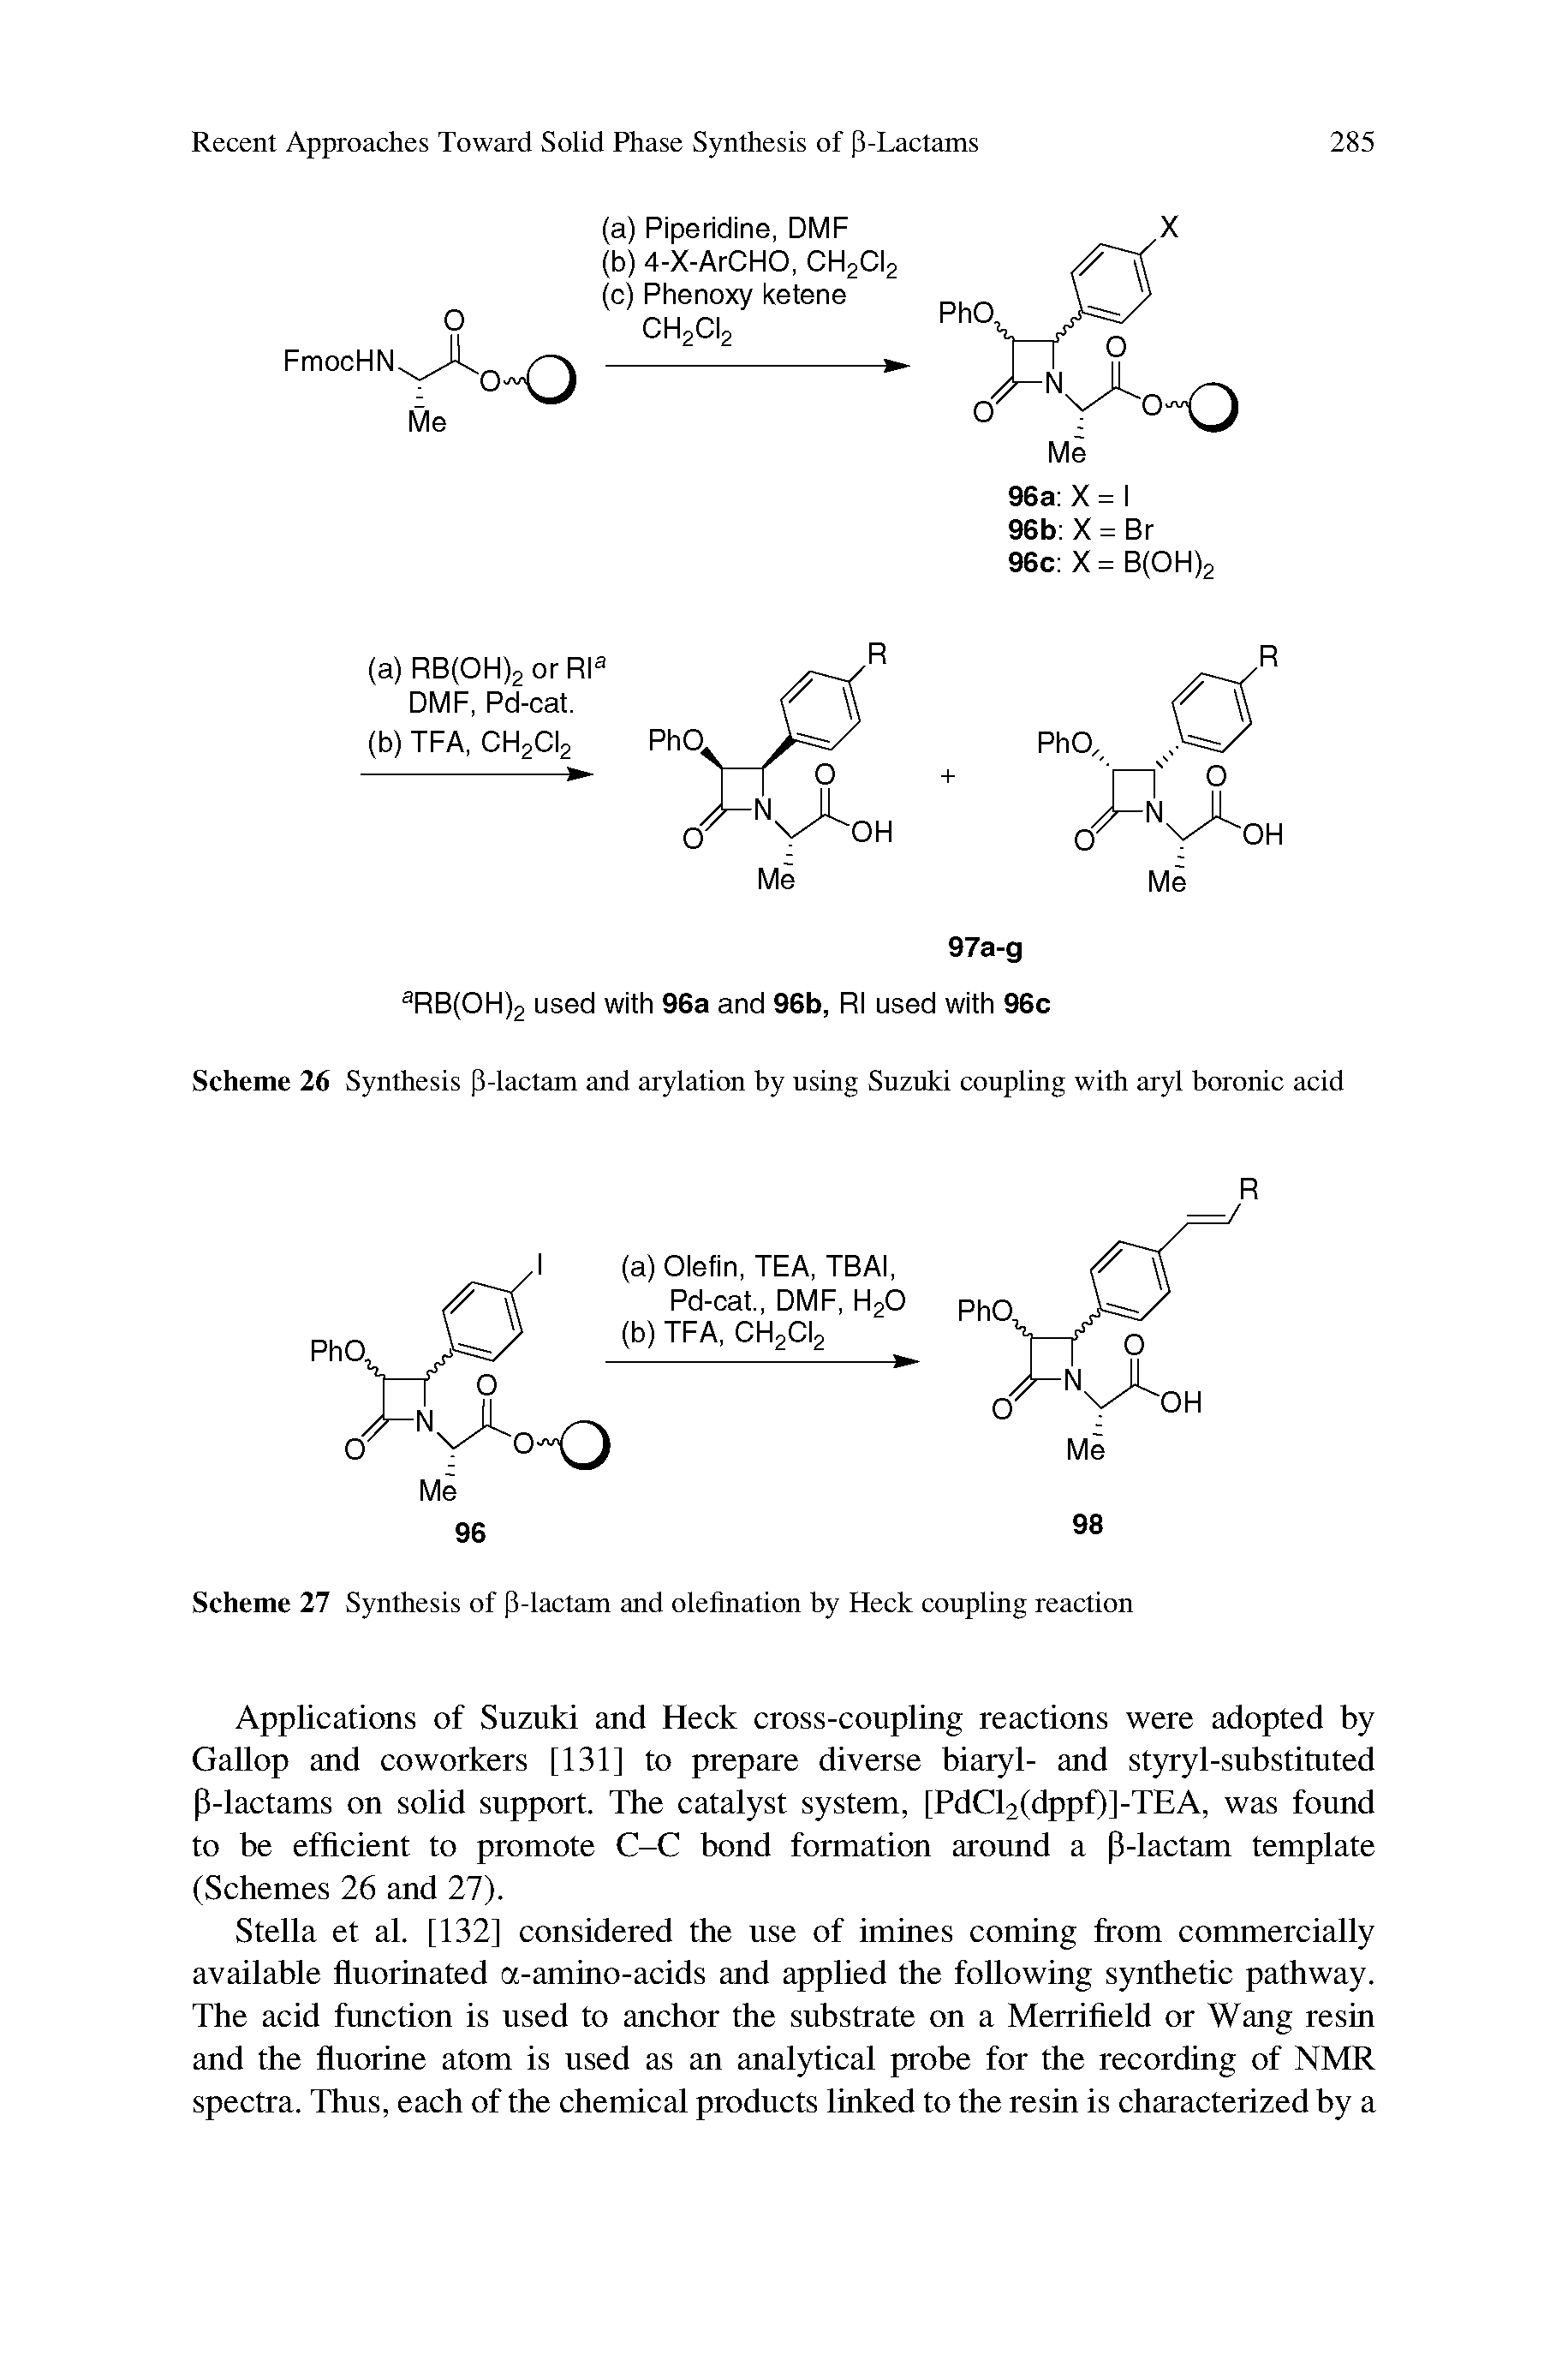 Scheme 26 Synthesis P-lactam and arylation by using Suzuki coupling with aryl boronic acid...